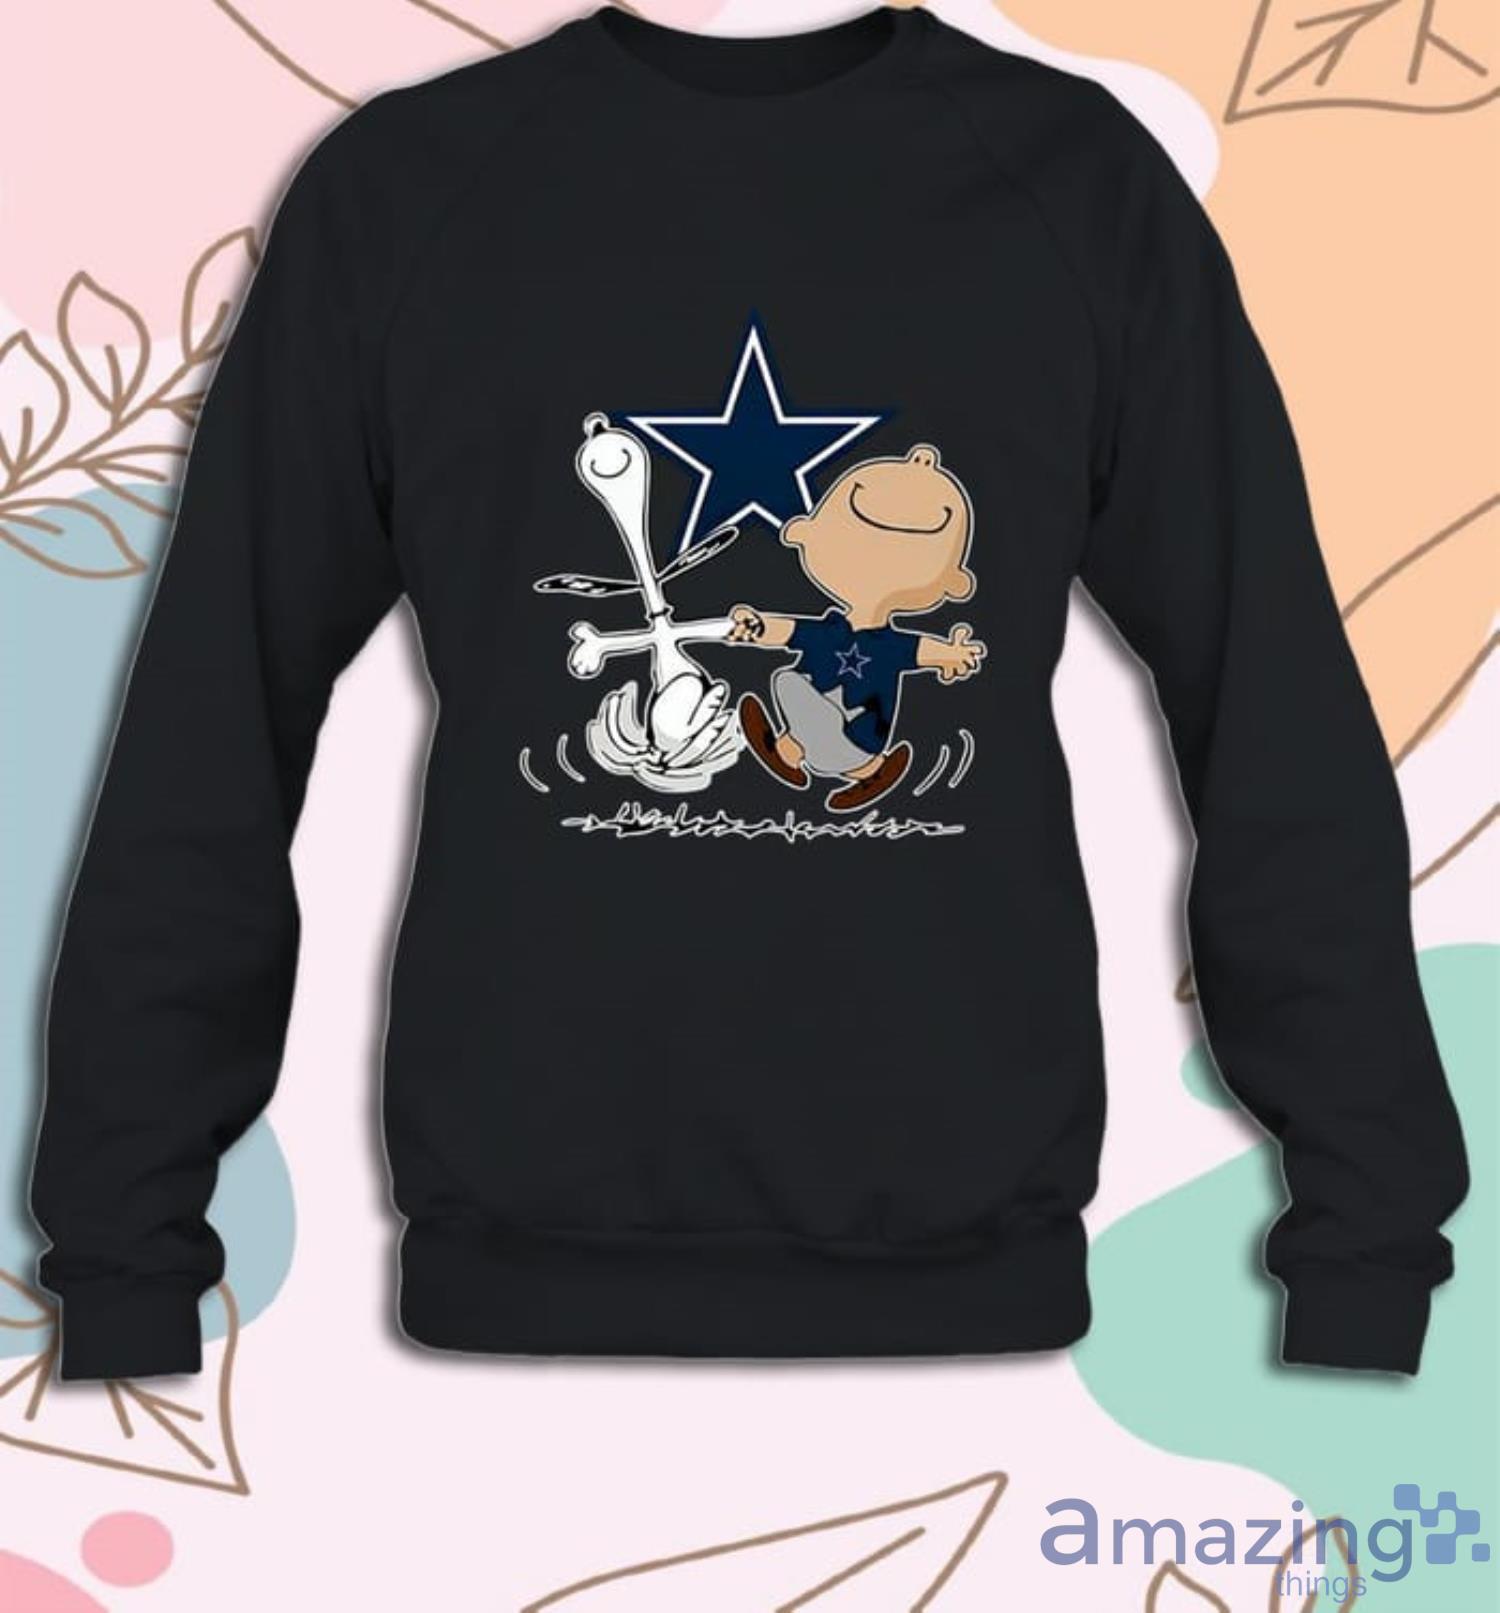 Nfl Dallas Cowboys Charlie Brown Snoopy Dallas Cowboys T-Shirt For Fans